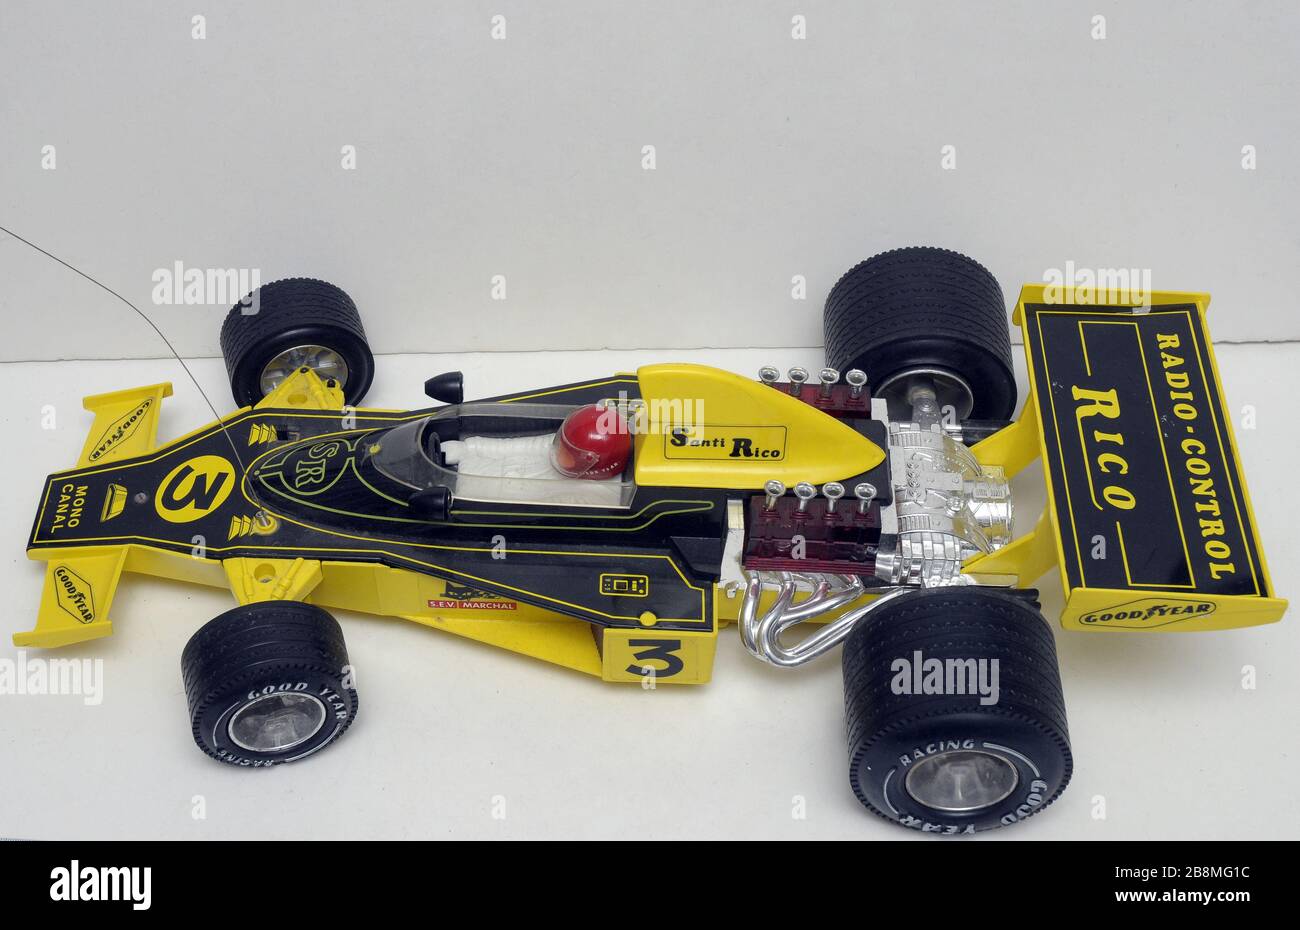 Colección de coches Miniatura de F1 - Fórmula 1 Videos